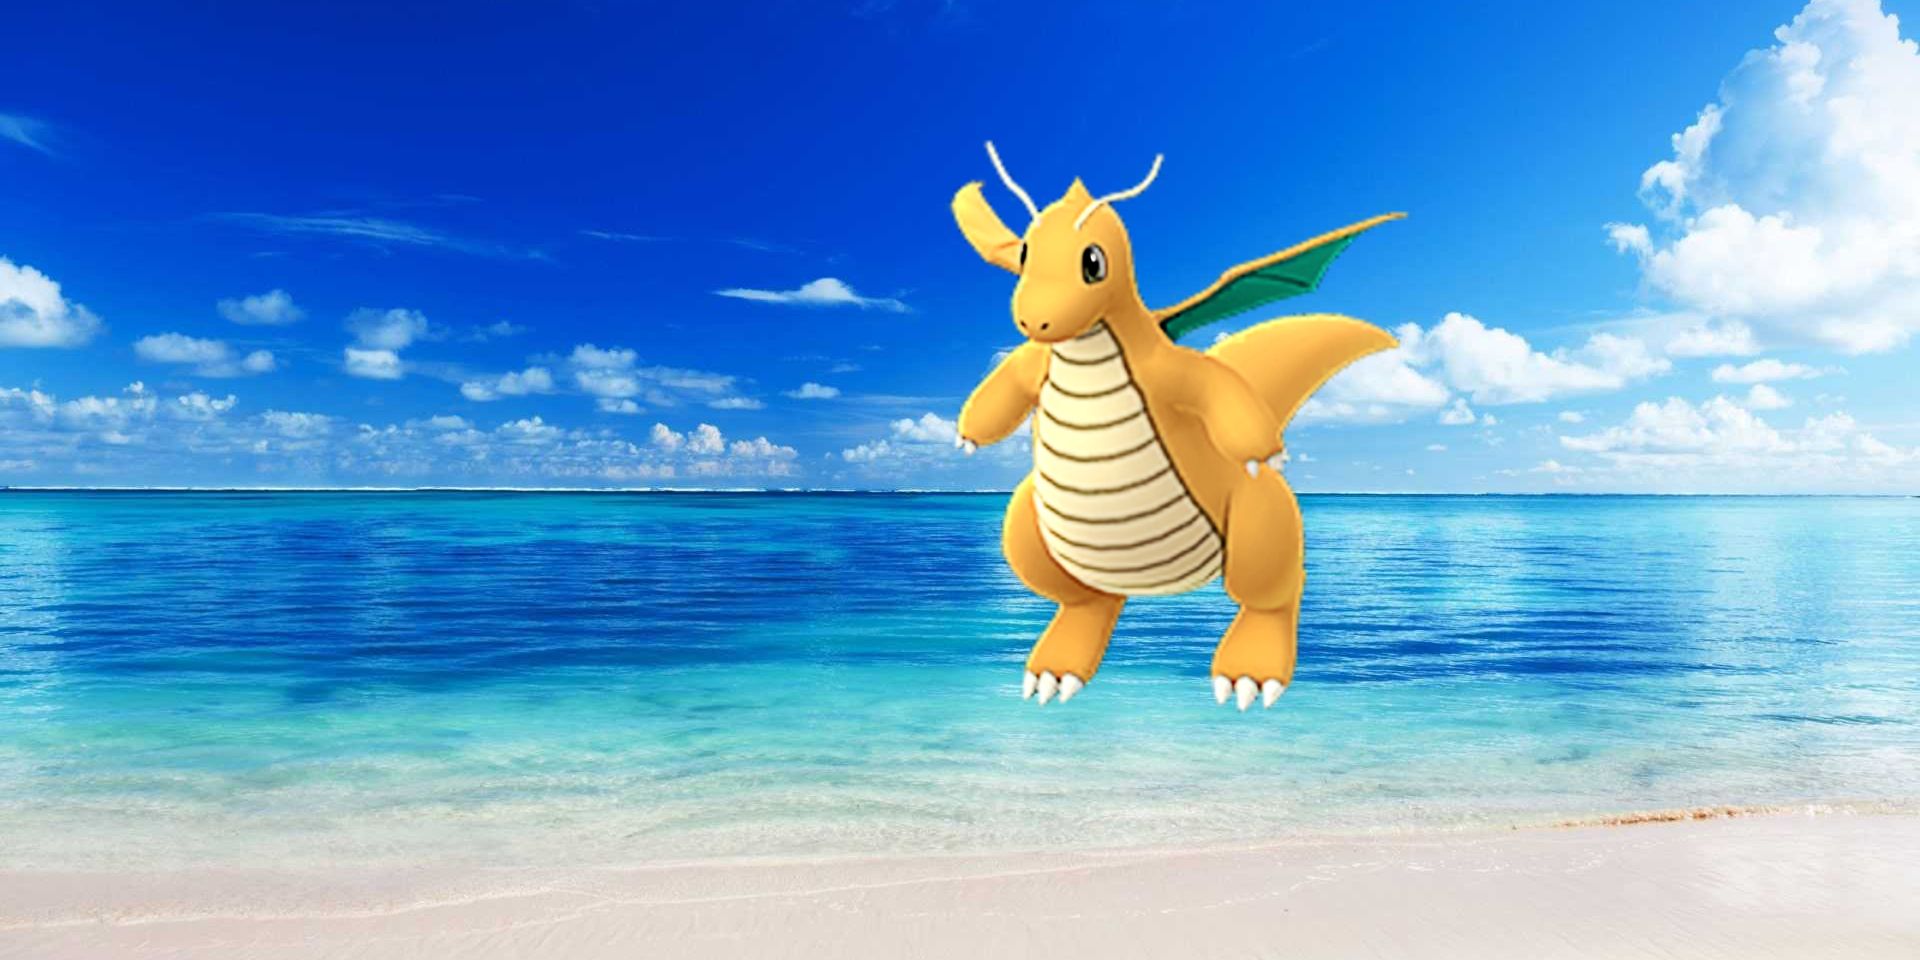 dragonite pokemon go avatar on a beach background.